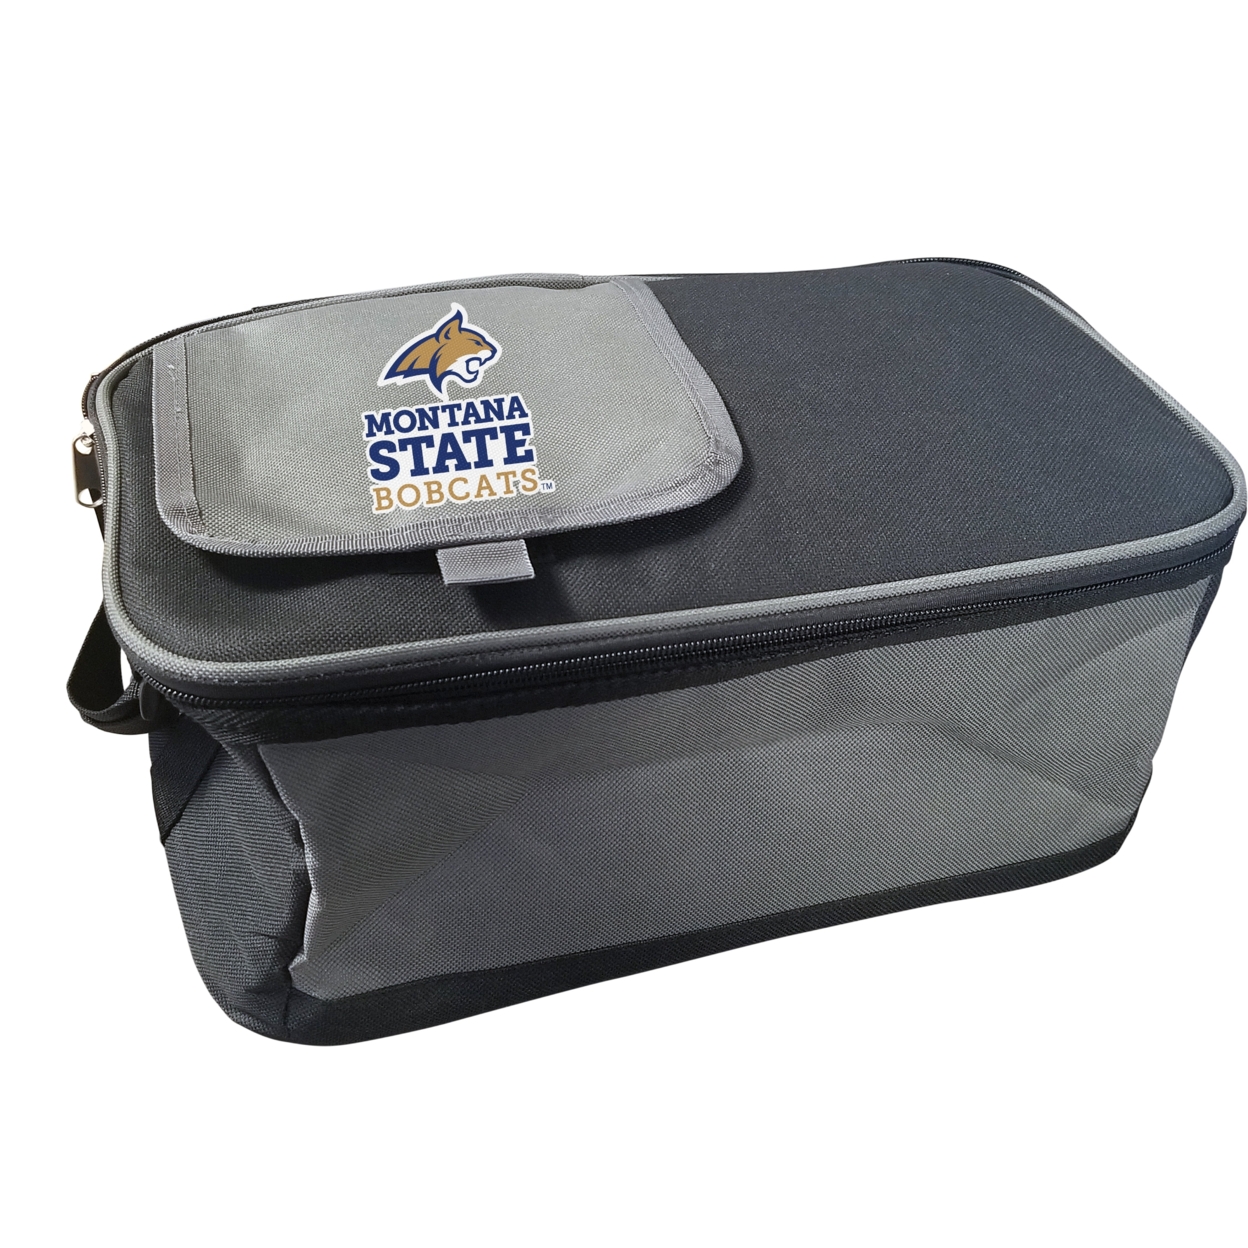 Montana State Bobcats 9 Pack Cooler